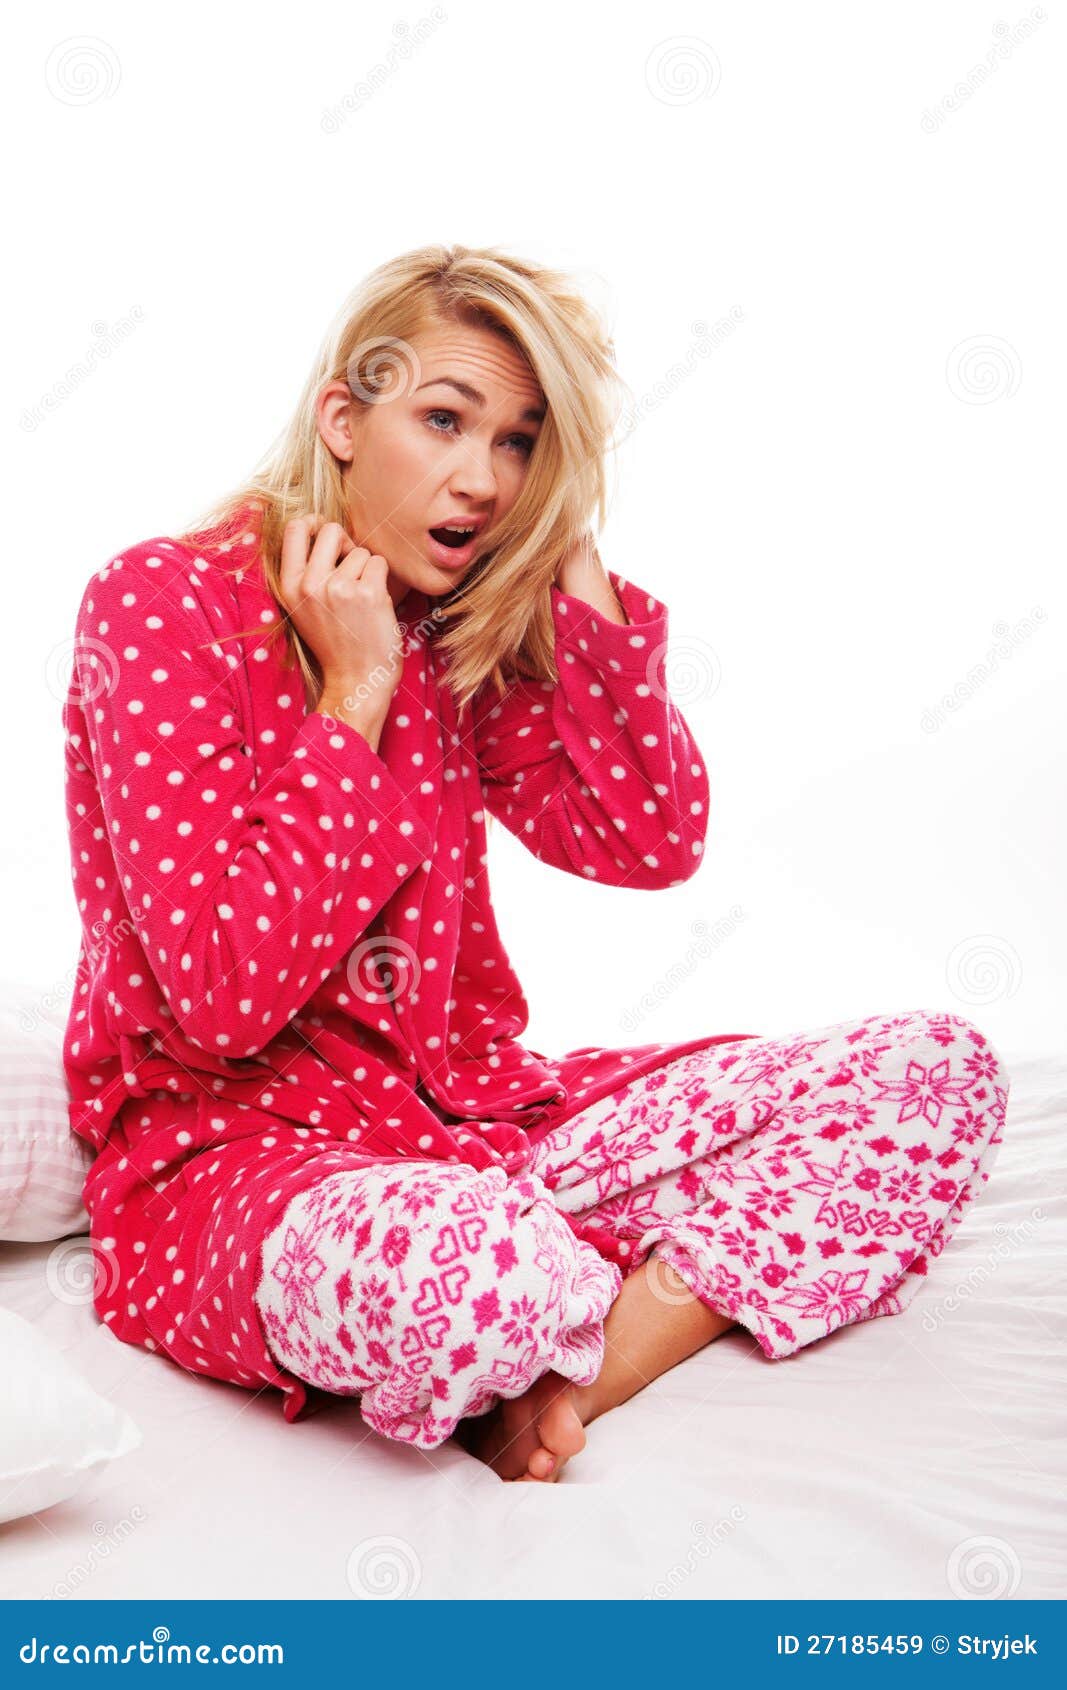 Langskomen Jabeth Wilson onze Woman in pyjamas yawning stock image. Image of beautiful - 27185459